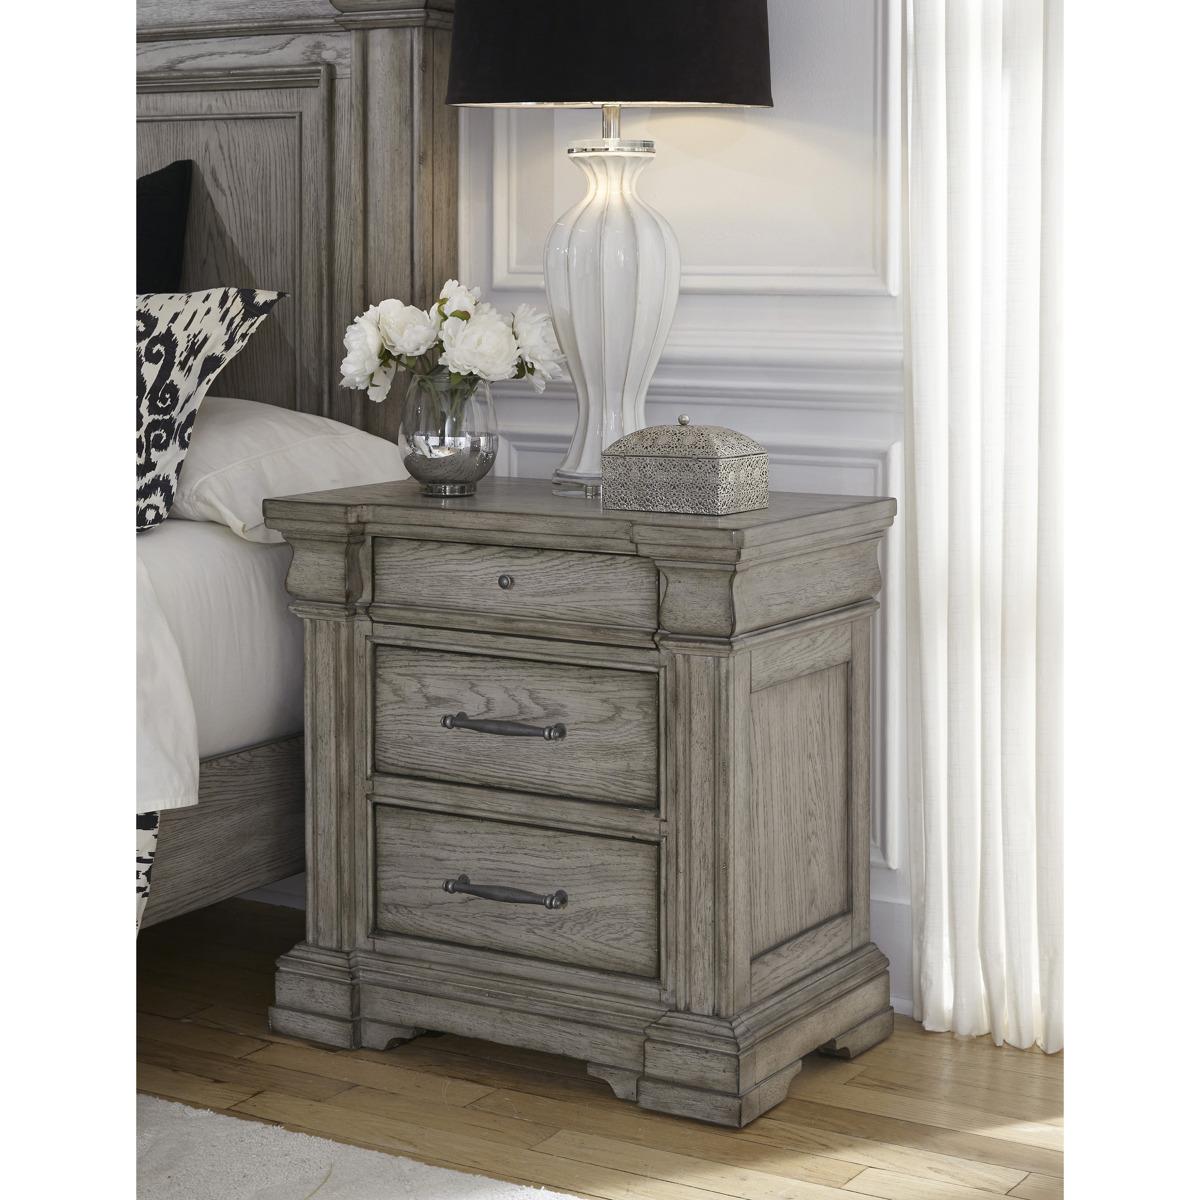 Pulaski Madison Ridge Nightstand in Heritage Taupe������P091140 - Luxury Home Furniture (MI)